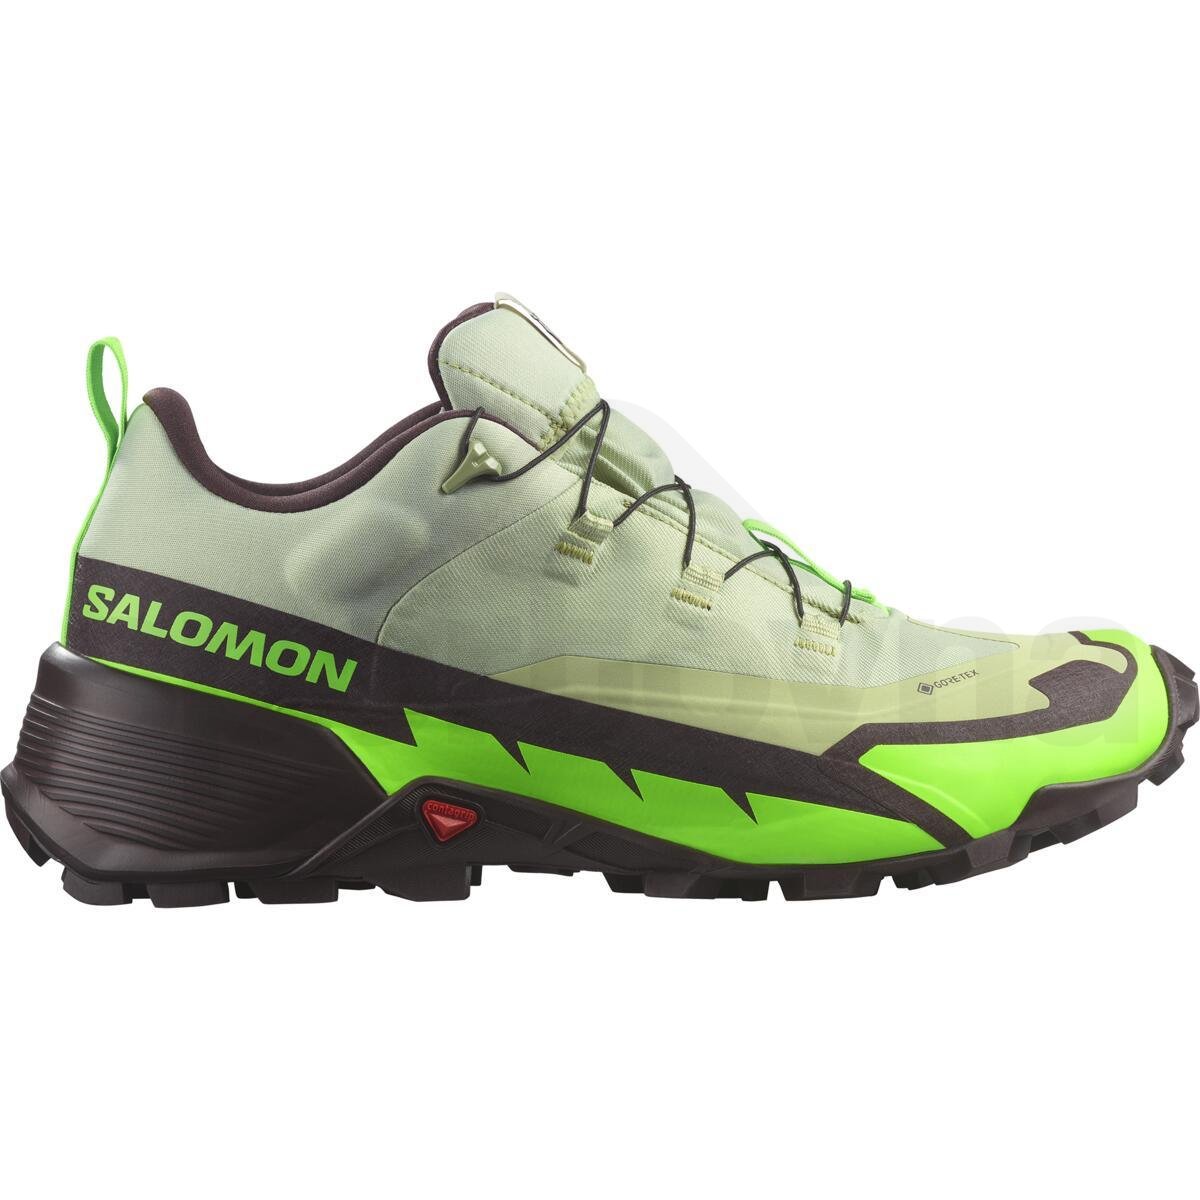 Obuv Salomon Cross Hike GTX 2 M - zelená/černá